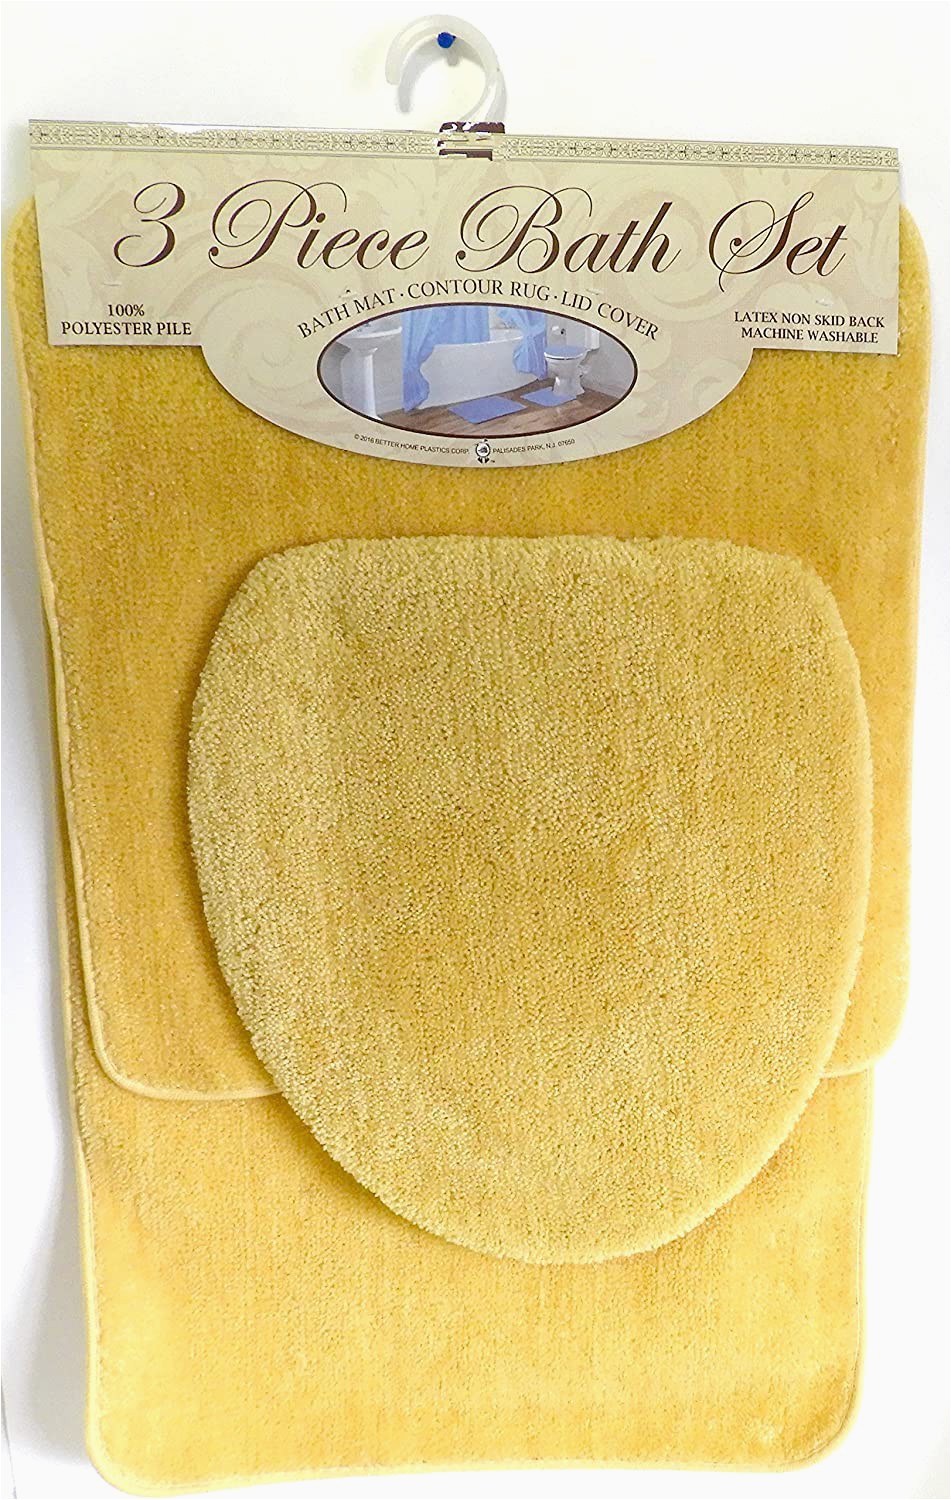 Bathroom Rug Sets Yellow Buy 3 Piece Bath Rug Set Mustard Yellow Bathroom Mat Contour